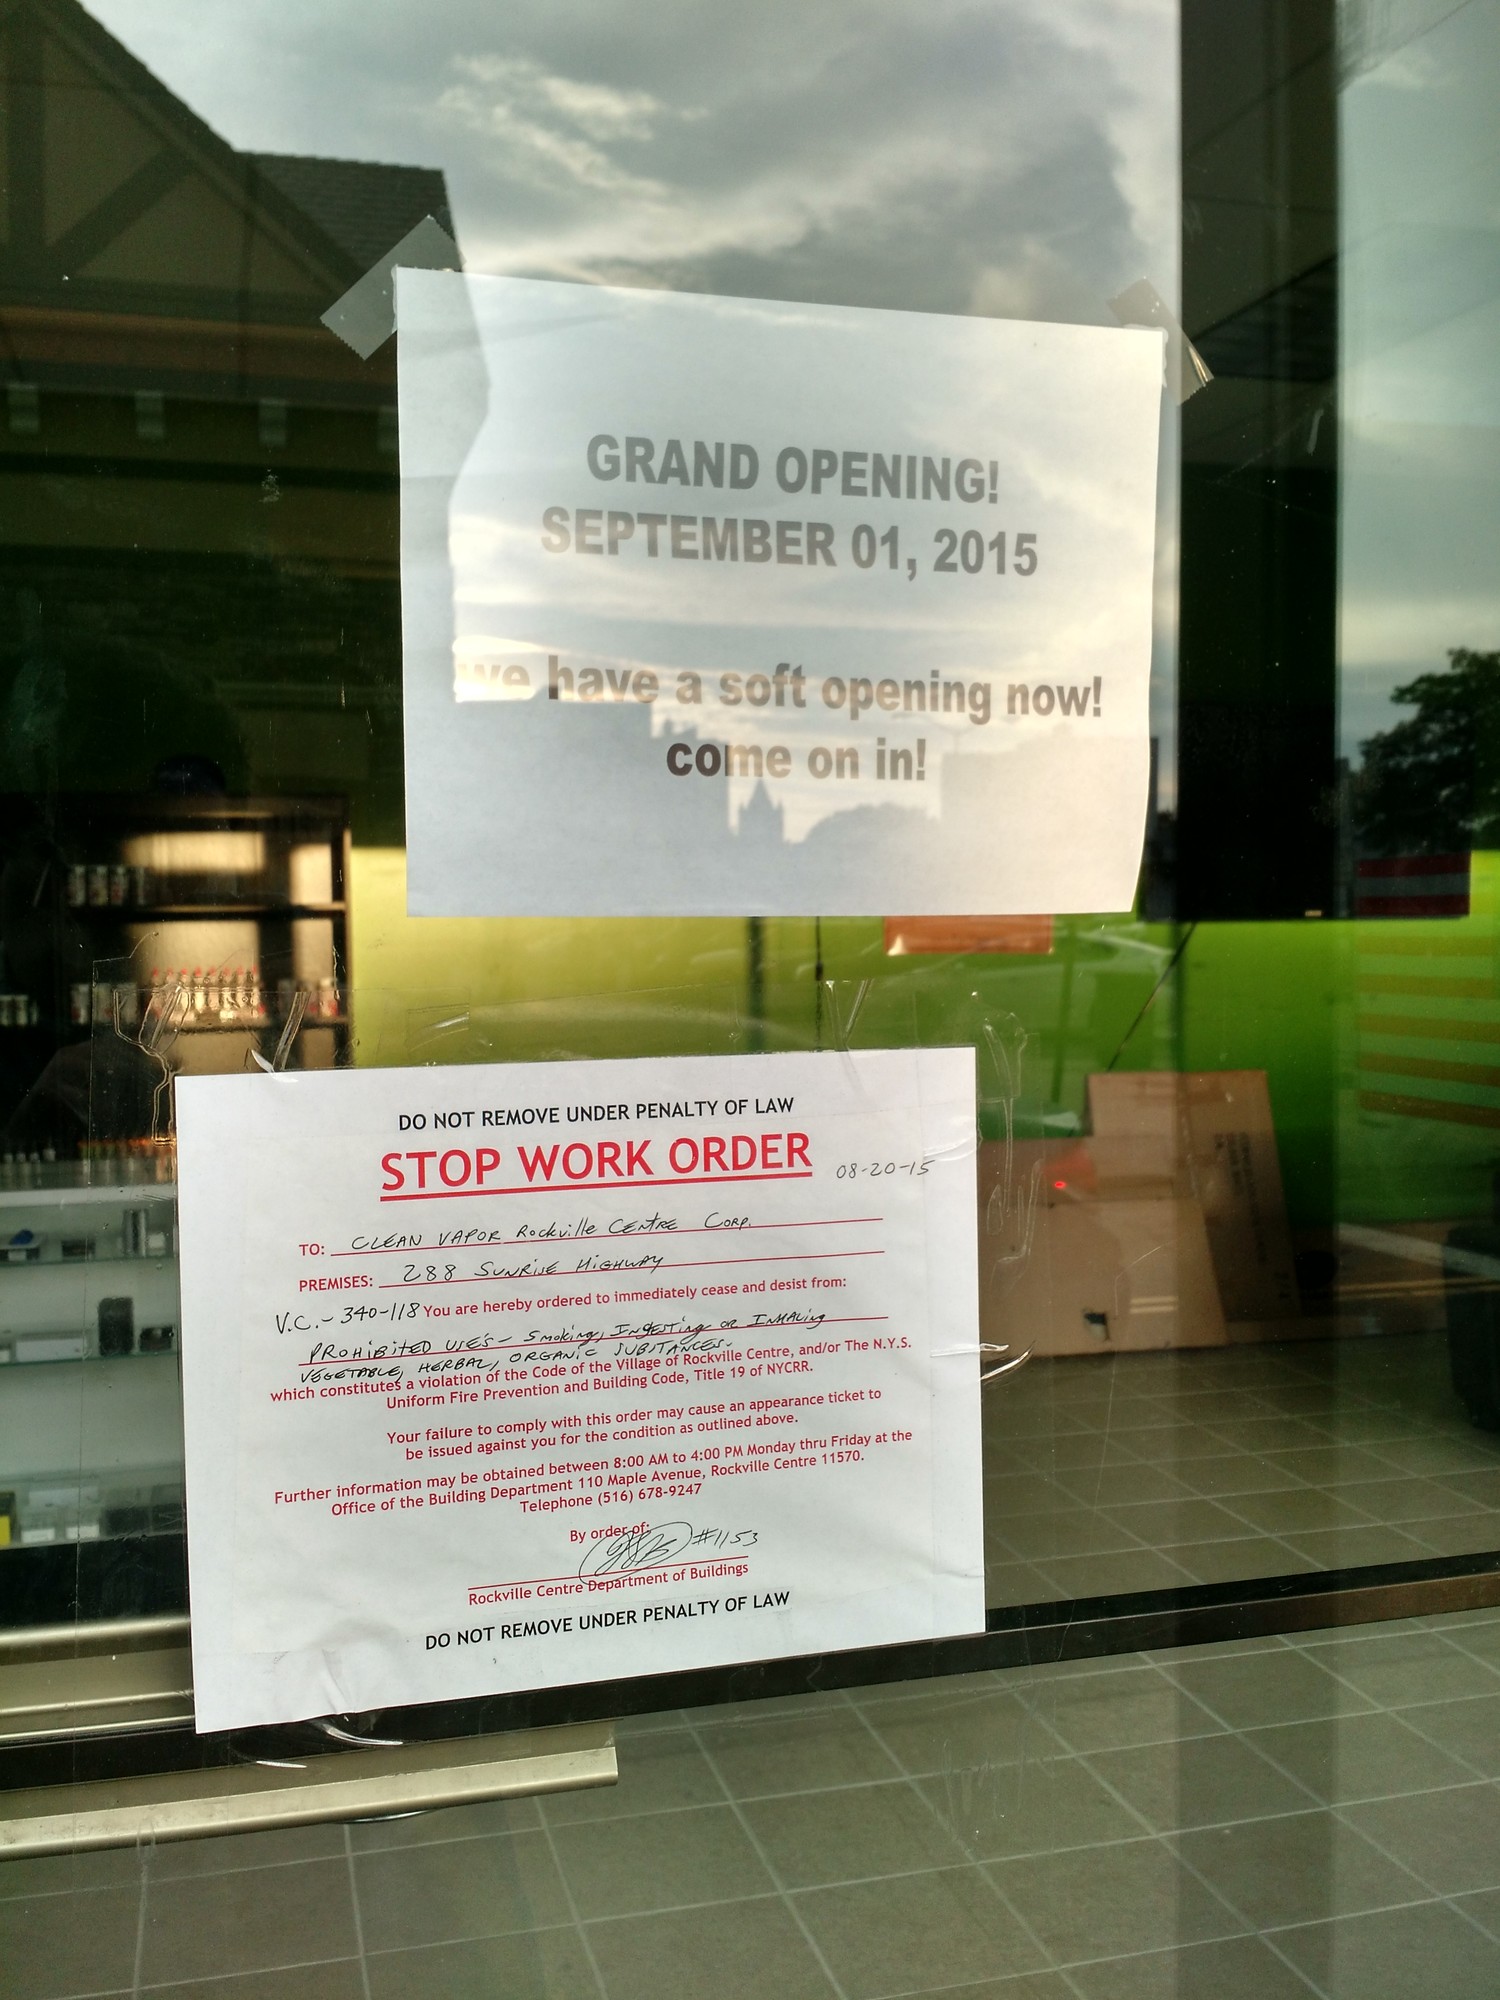 Clean Vapor Rockville Centre was open before receiving a stop work order.